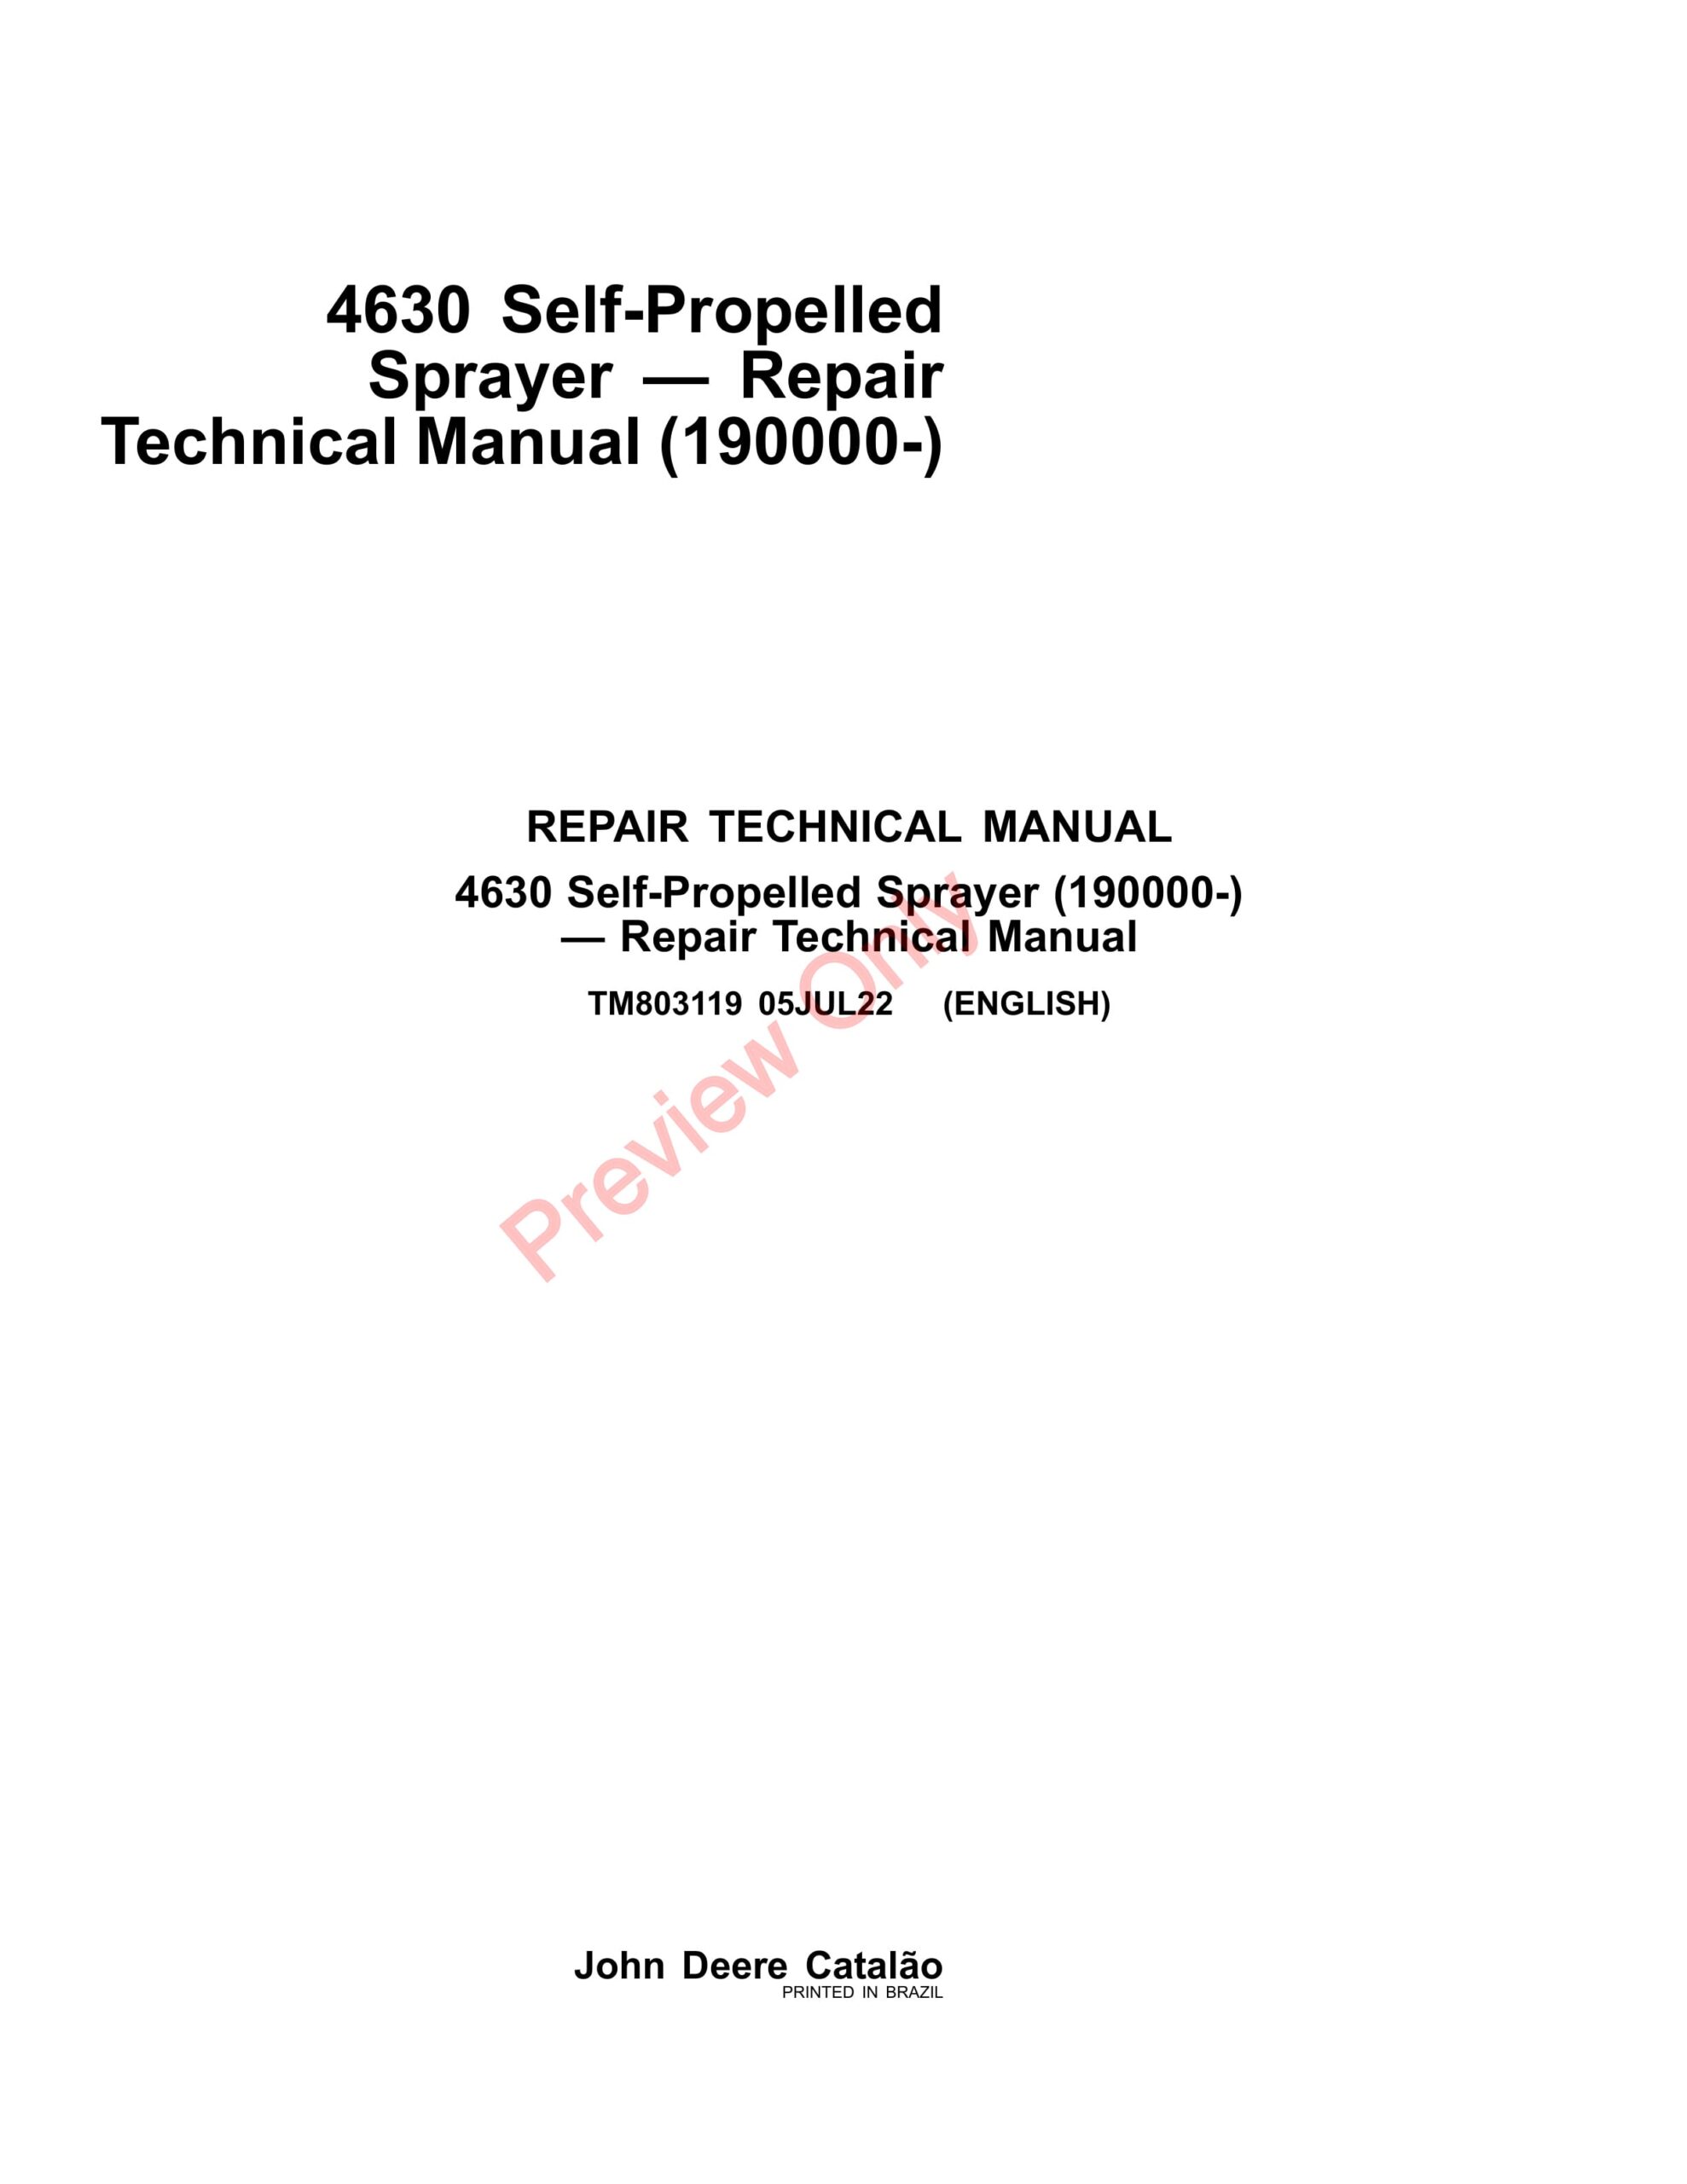 John Deere 4630 Self-Propelled Sprayers Repair Technical Manual TM803119 05JUL22-1